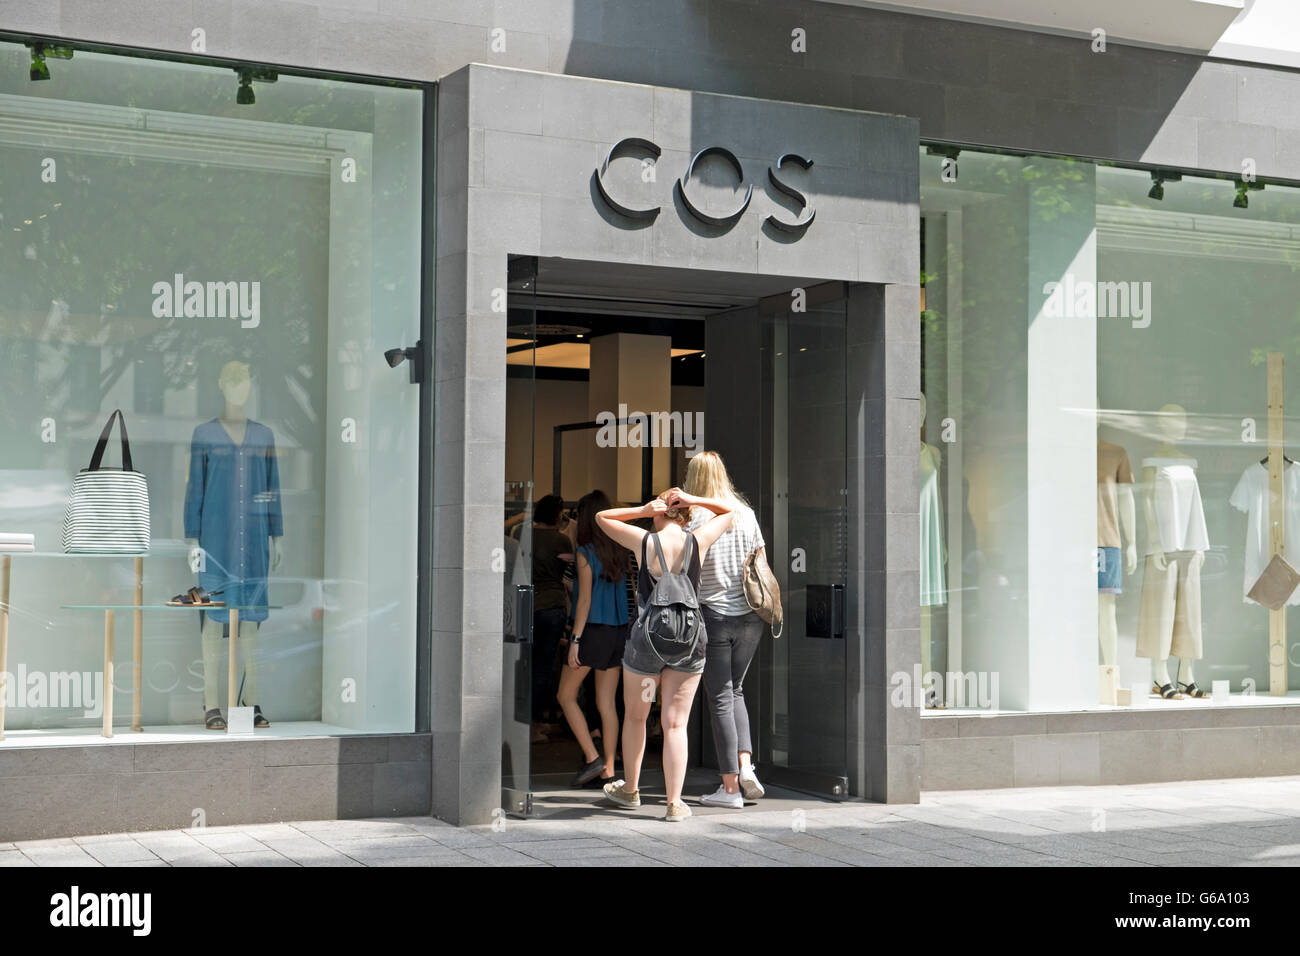 COS clothes shop, Konigsalle, Dusseldorf, North Rhine-Westphalia, Germany  Stock Photo - Alamy